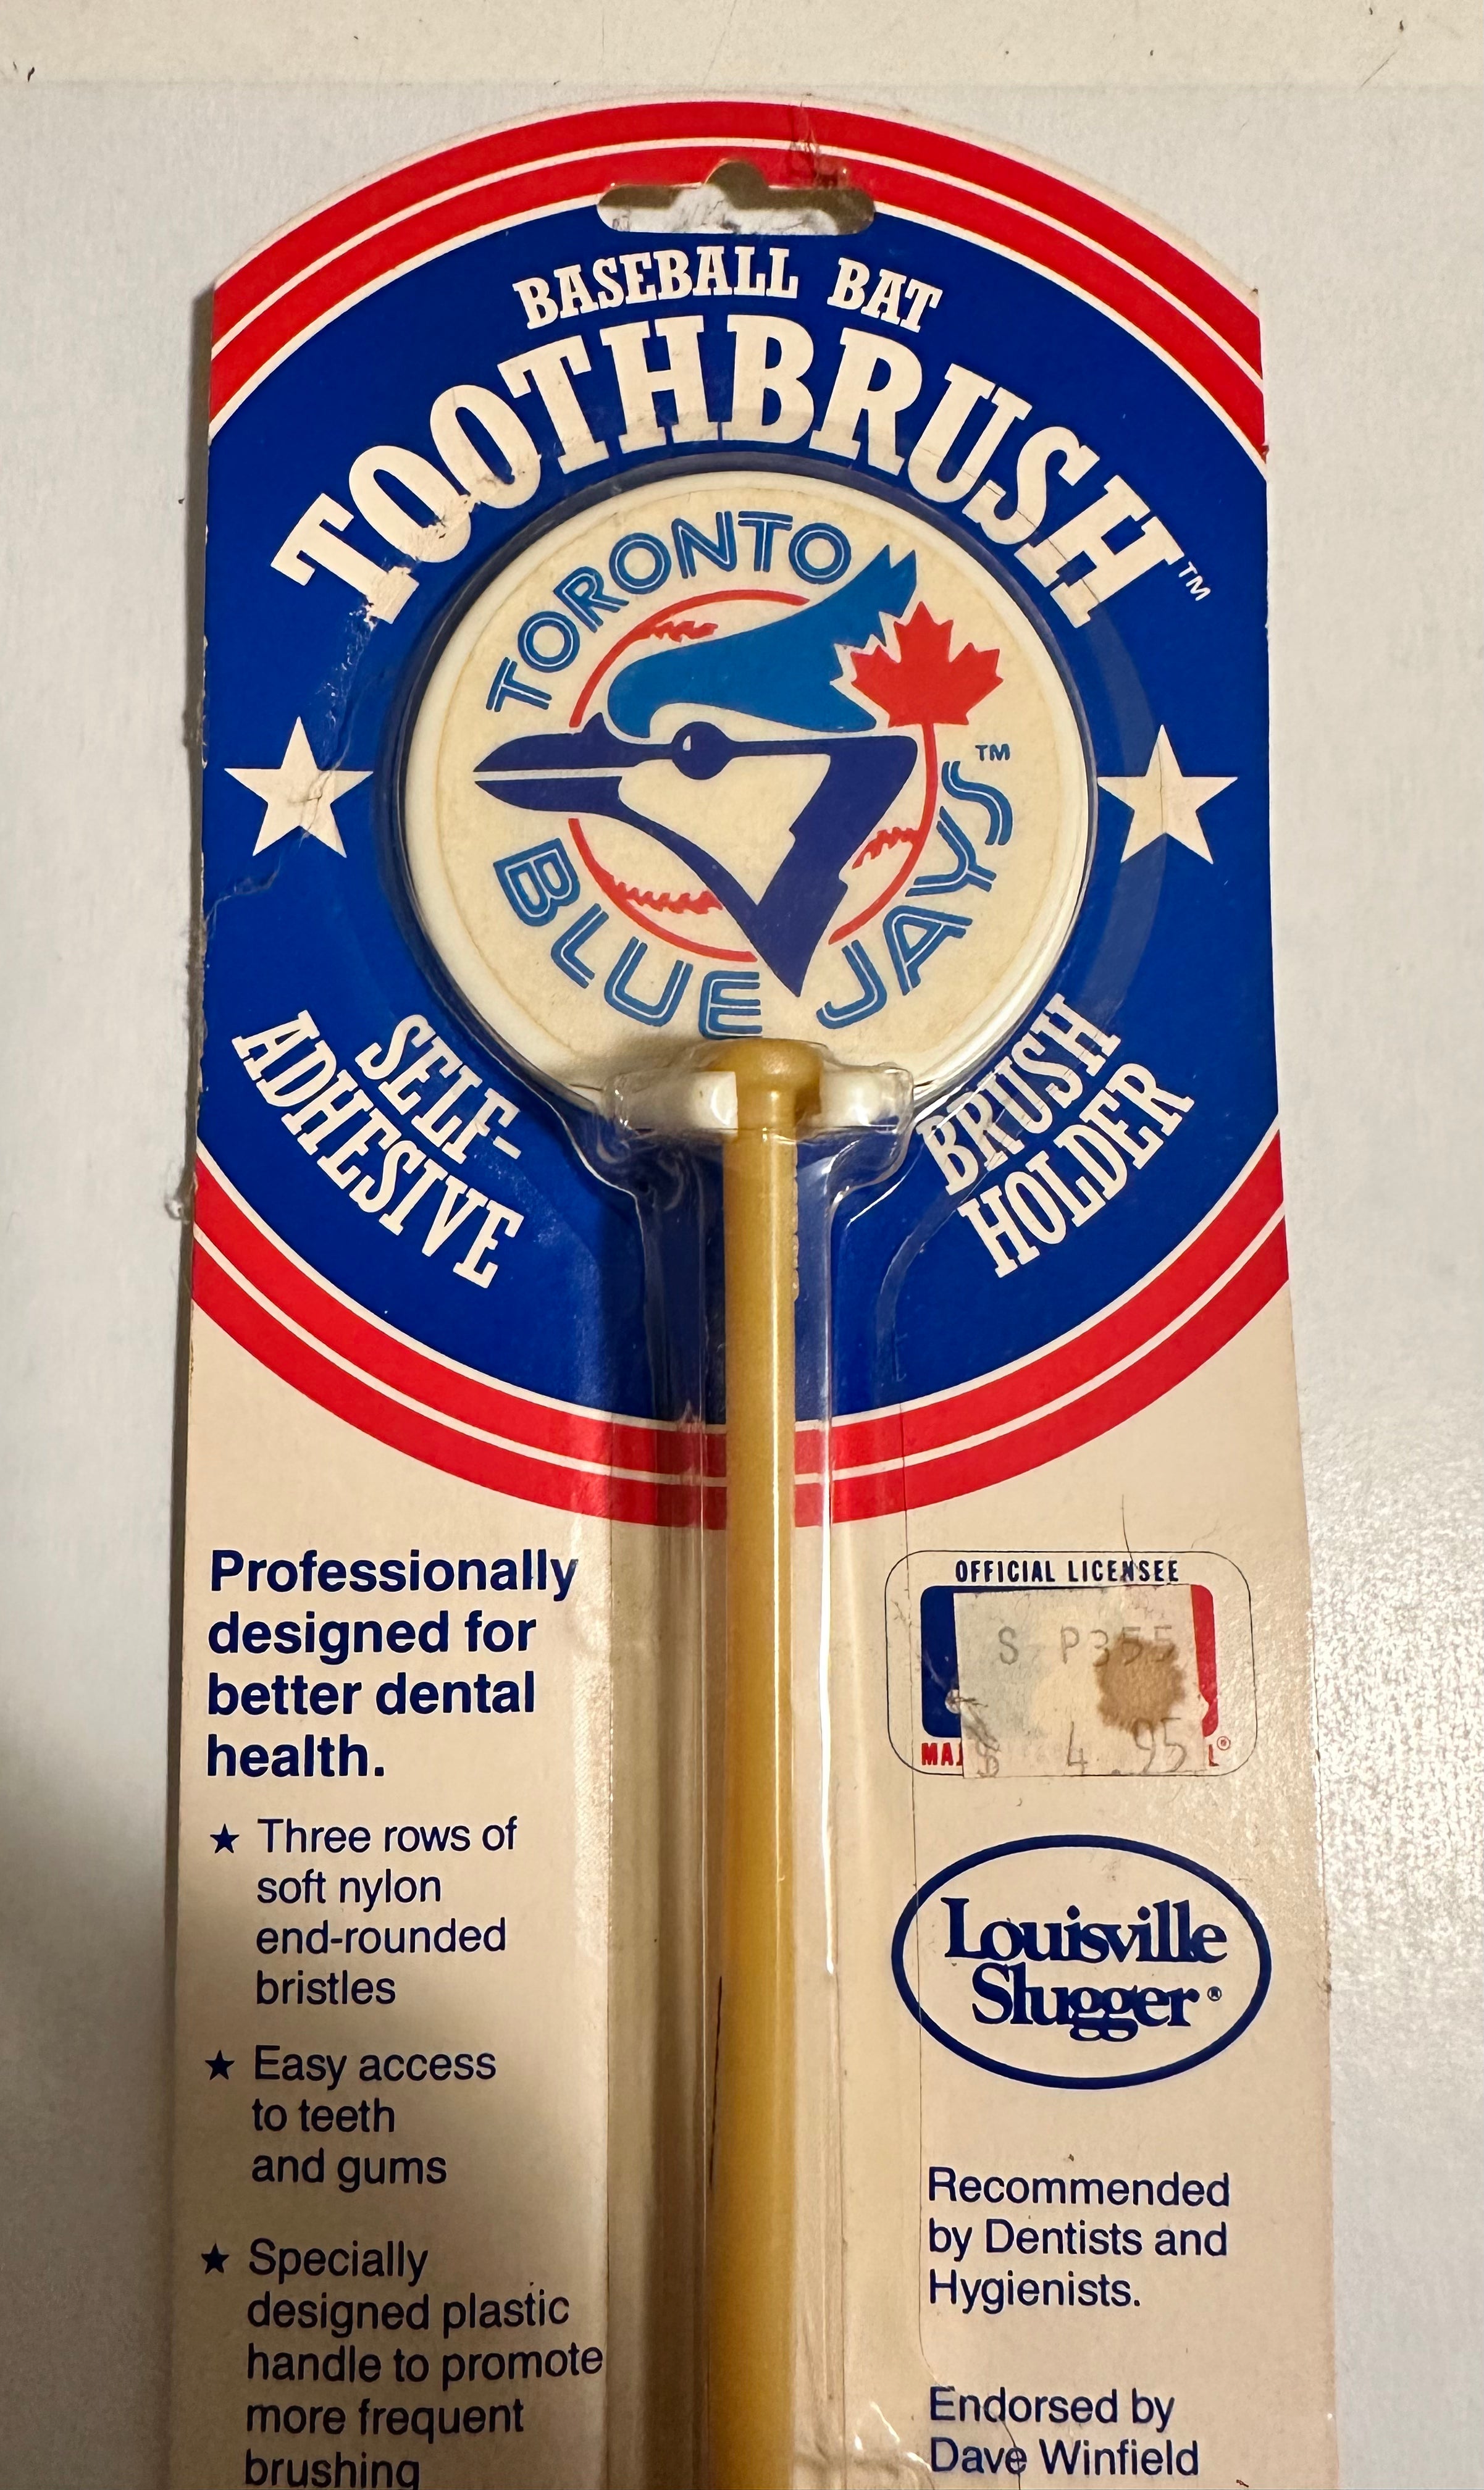 Toronto Blue Jays rare toothbrush factory sealed 1986